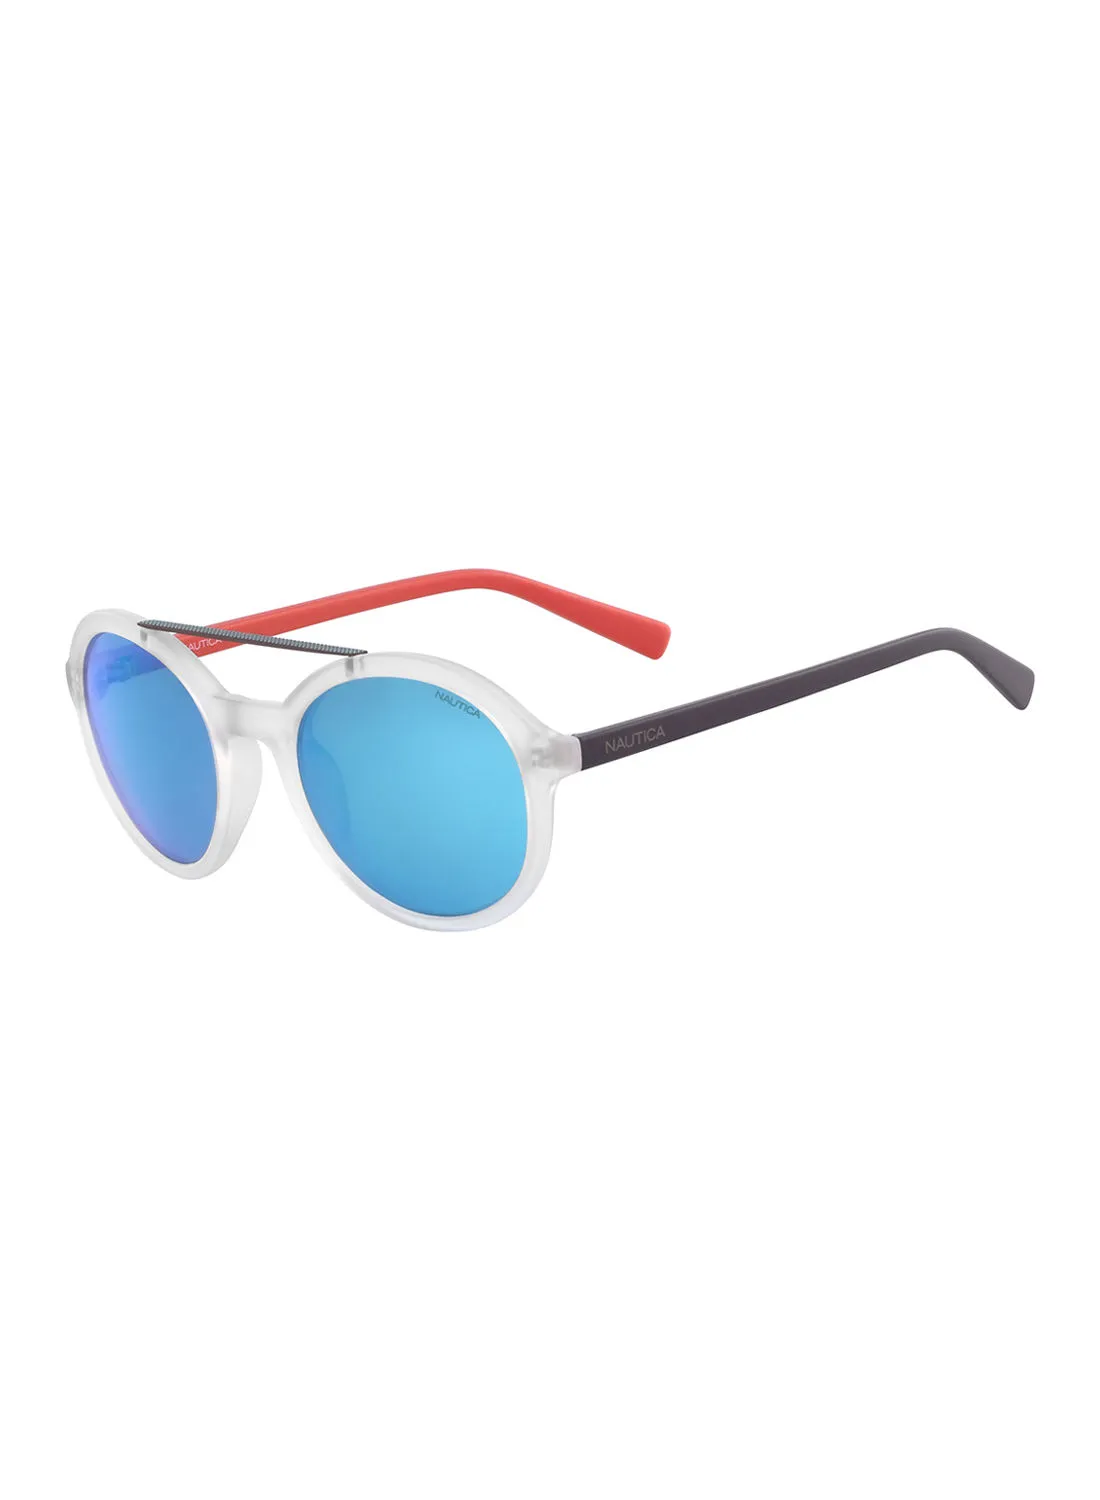 NAUTICA Men's UV Protection Round Sunglasses